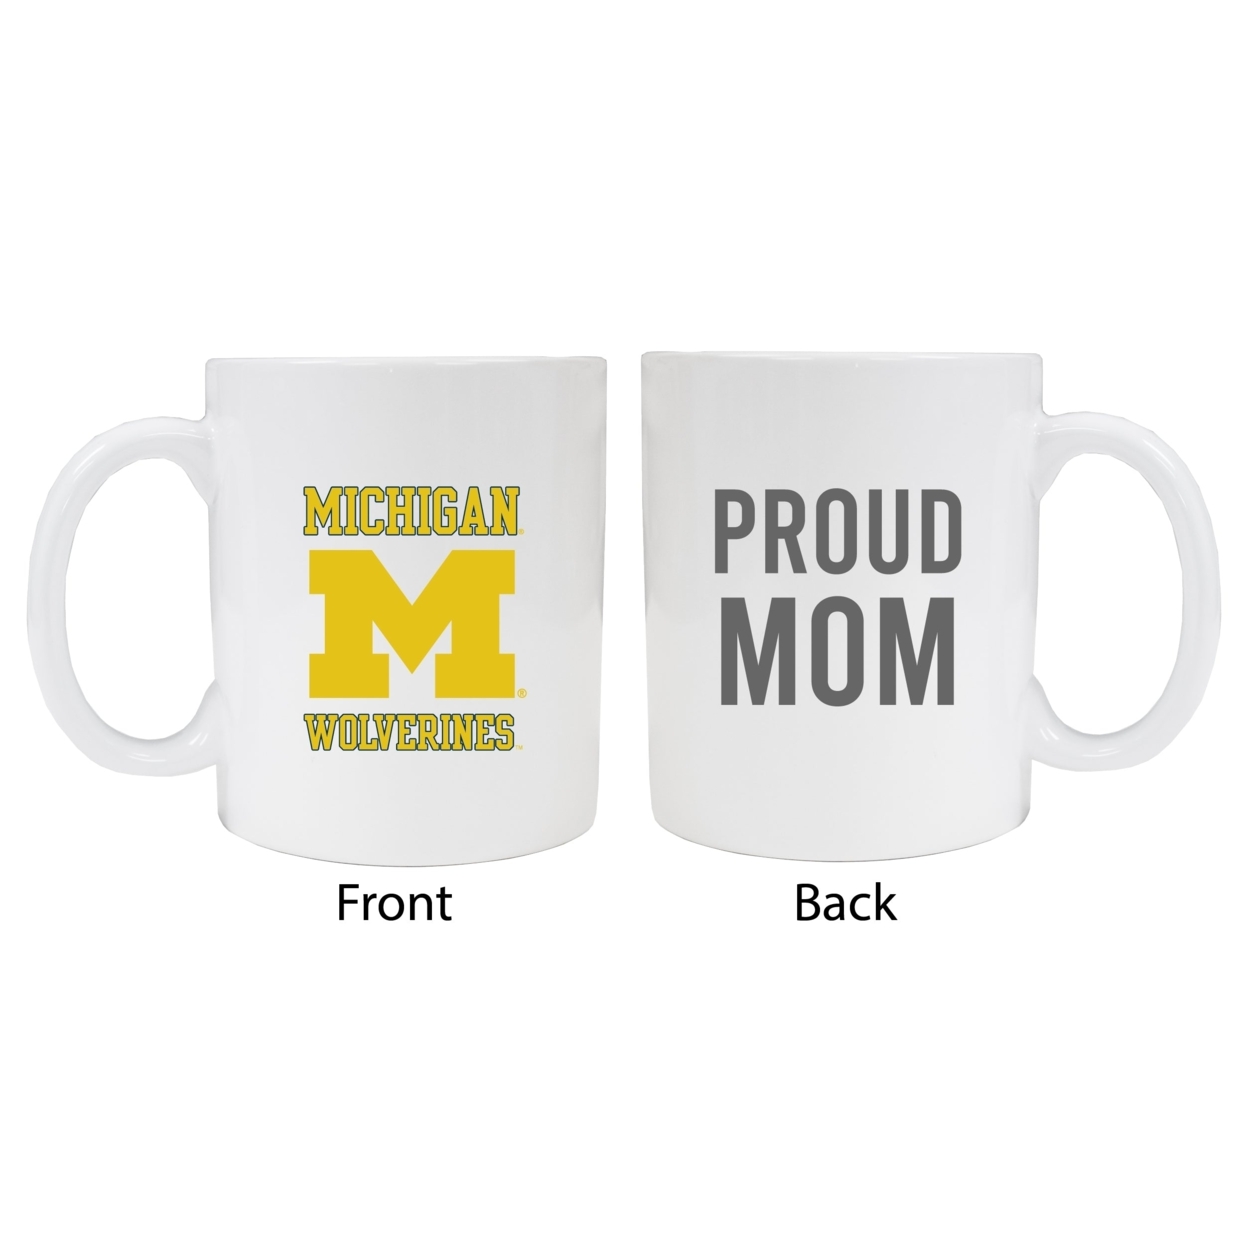 Michigan Wolverines Proud Mom Ceramic Coffee Mug - White